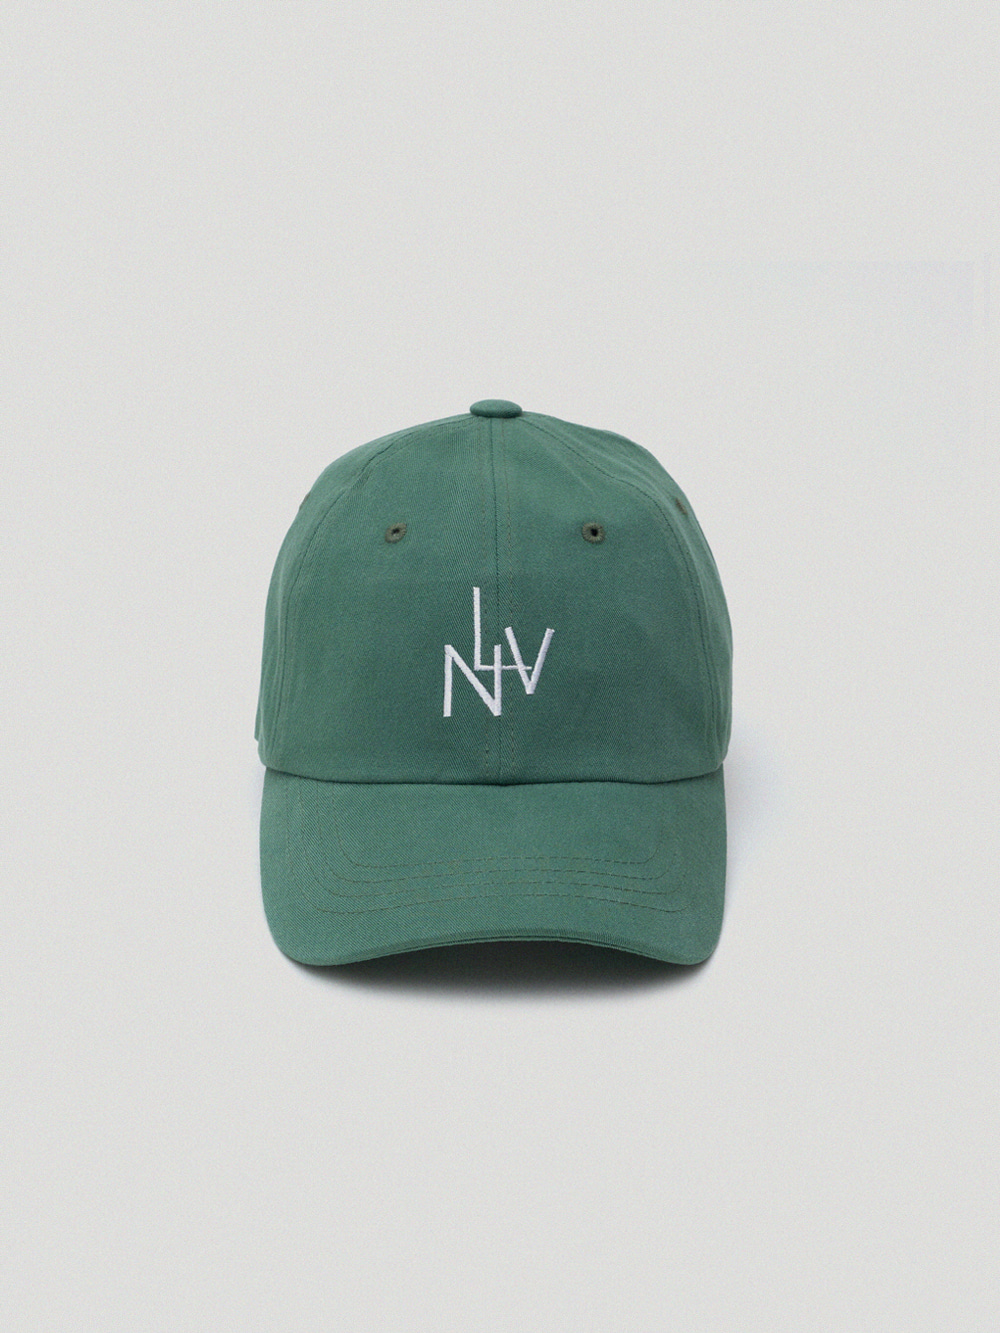 LNV Green Ball cap (그린)